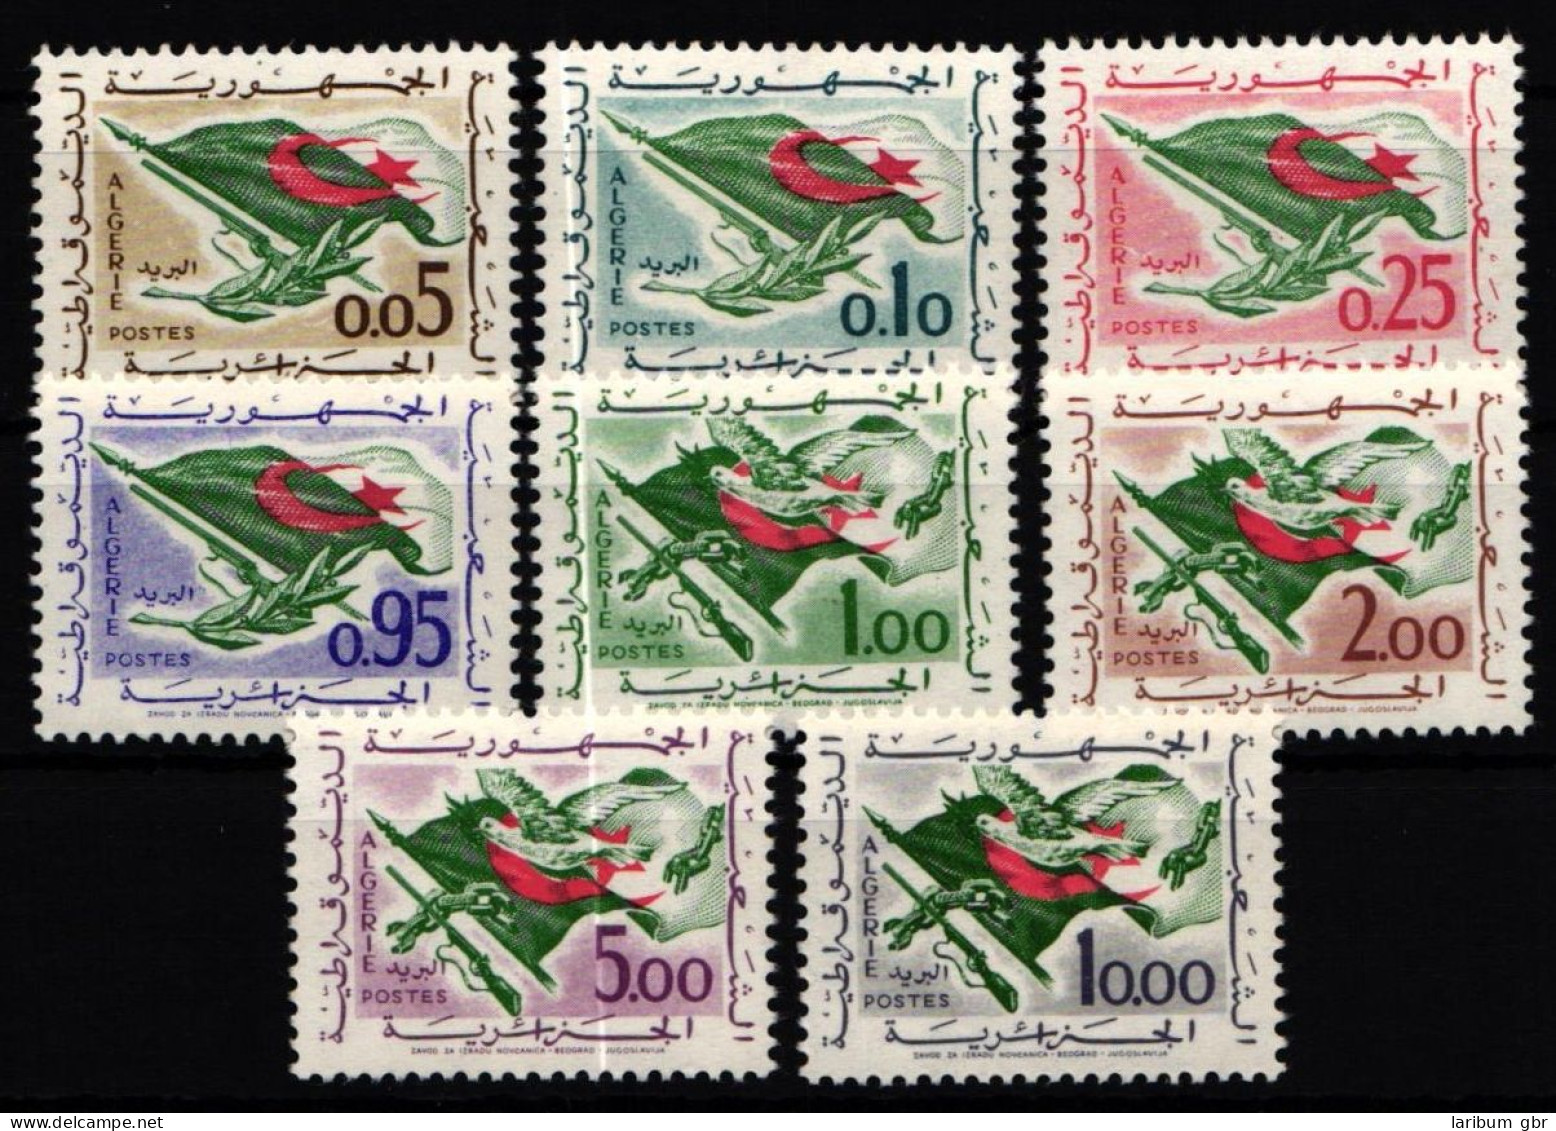 Algerien 394-401 Postfrisch #KX153 - Algérie (1962-...)